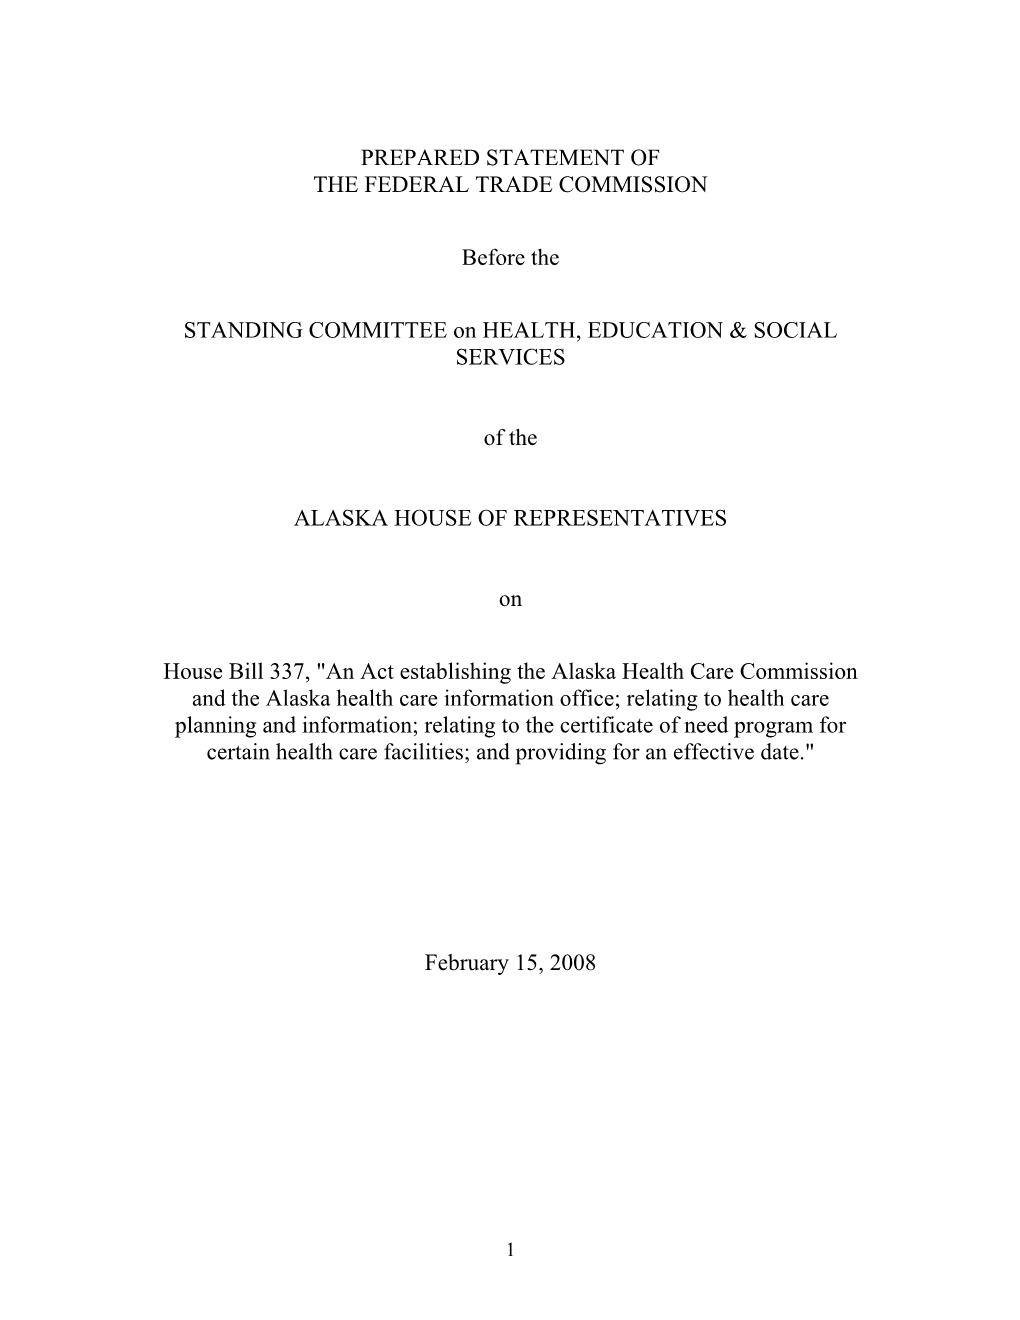 FTC Written Testimony Before the Alaska